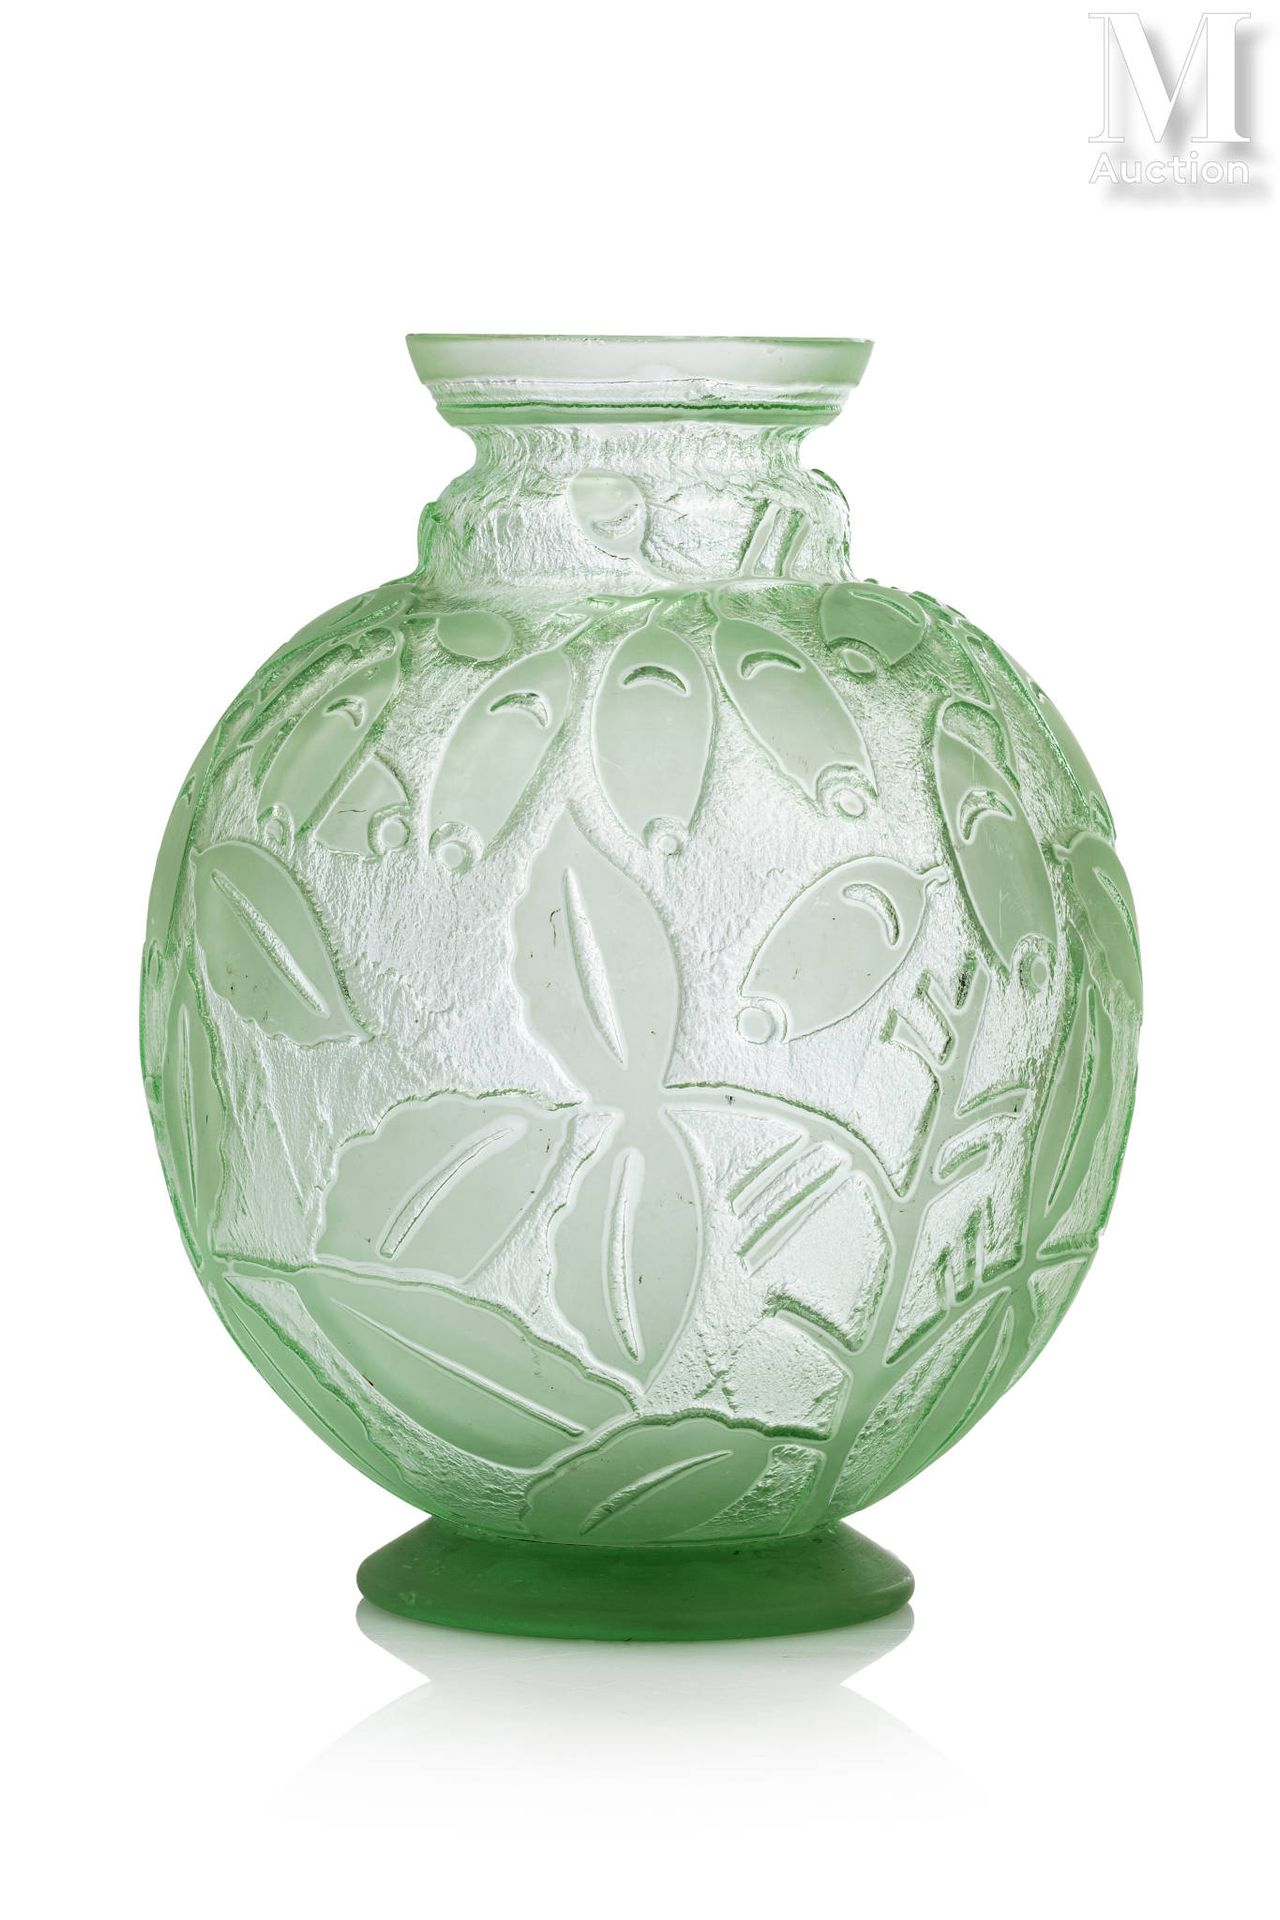 DAUM NANCY 绿色有色玻璃花瓶，窄颈，刻有风格化的花卉图案的装饰。

签名："Daum Nancy France"。

高：23厘米

(微型芯片)

&hellip;